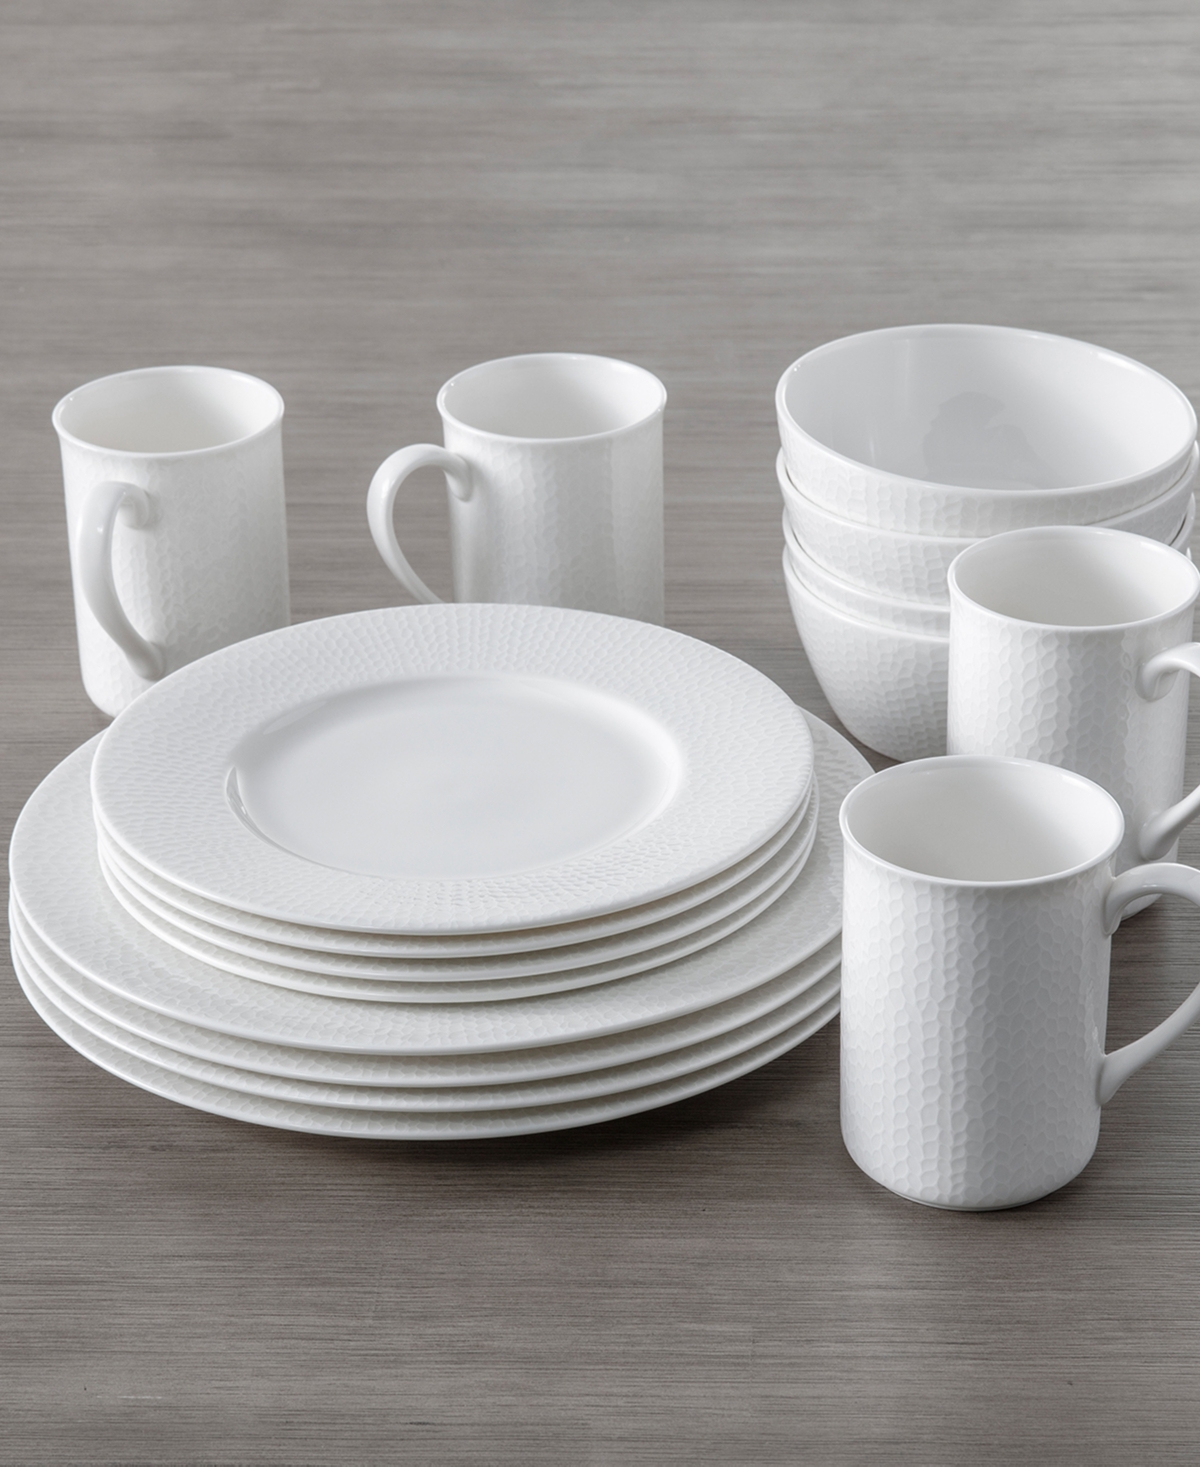 Amanda White Embossed 16-Piece Dinnerware Set, Service for 4 - White